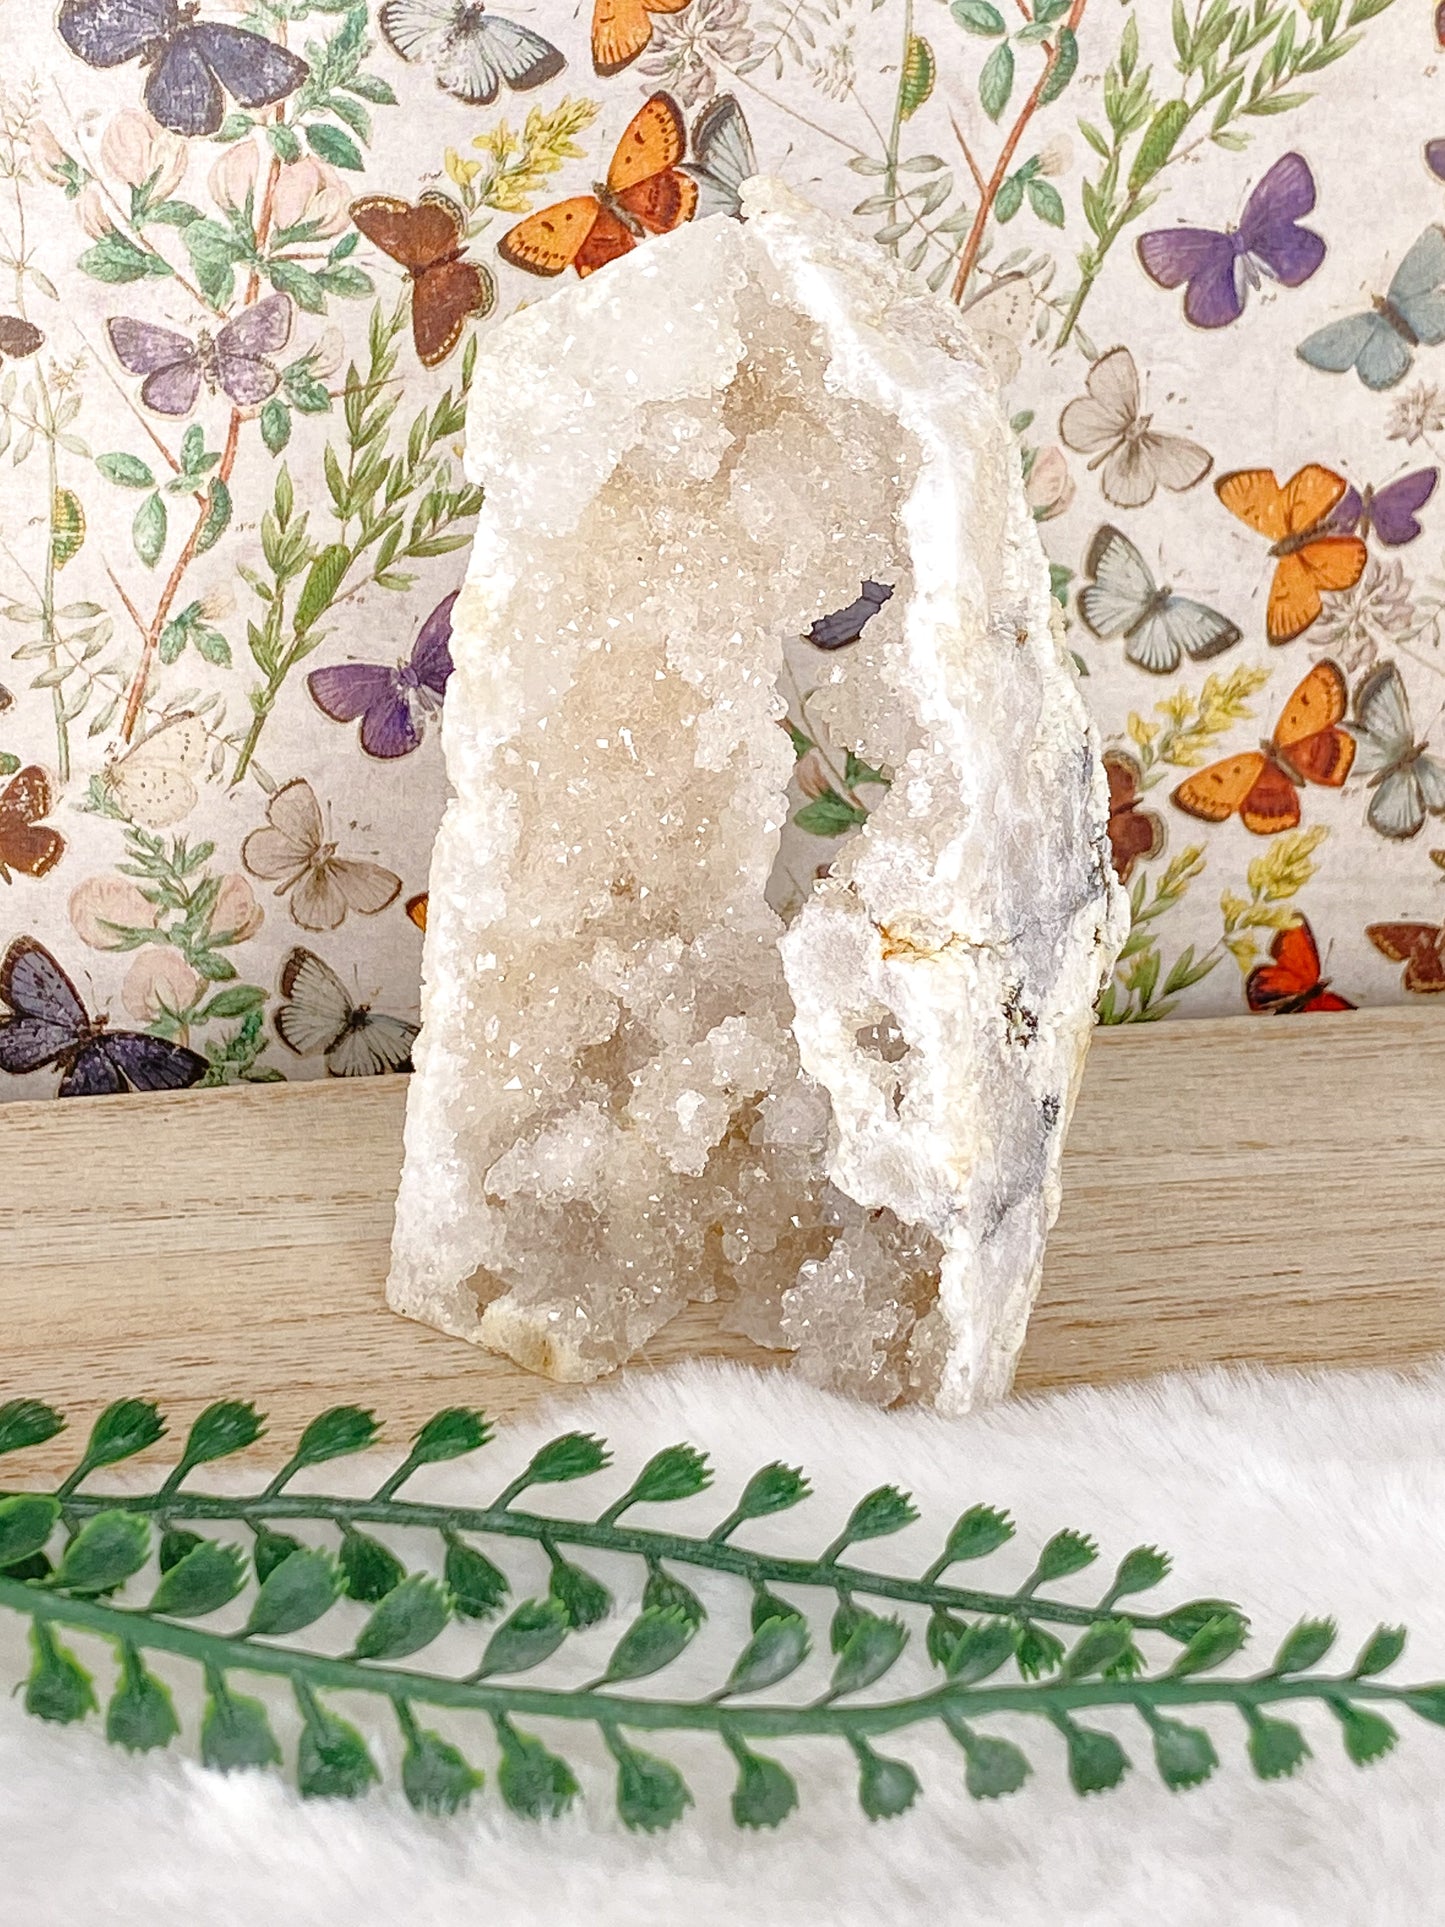 Calcite with Druzy Quartz Mineral